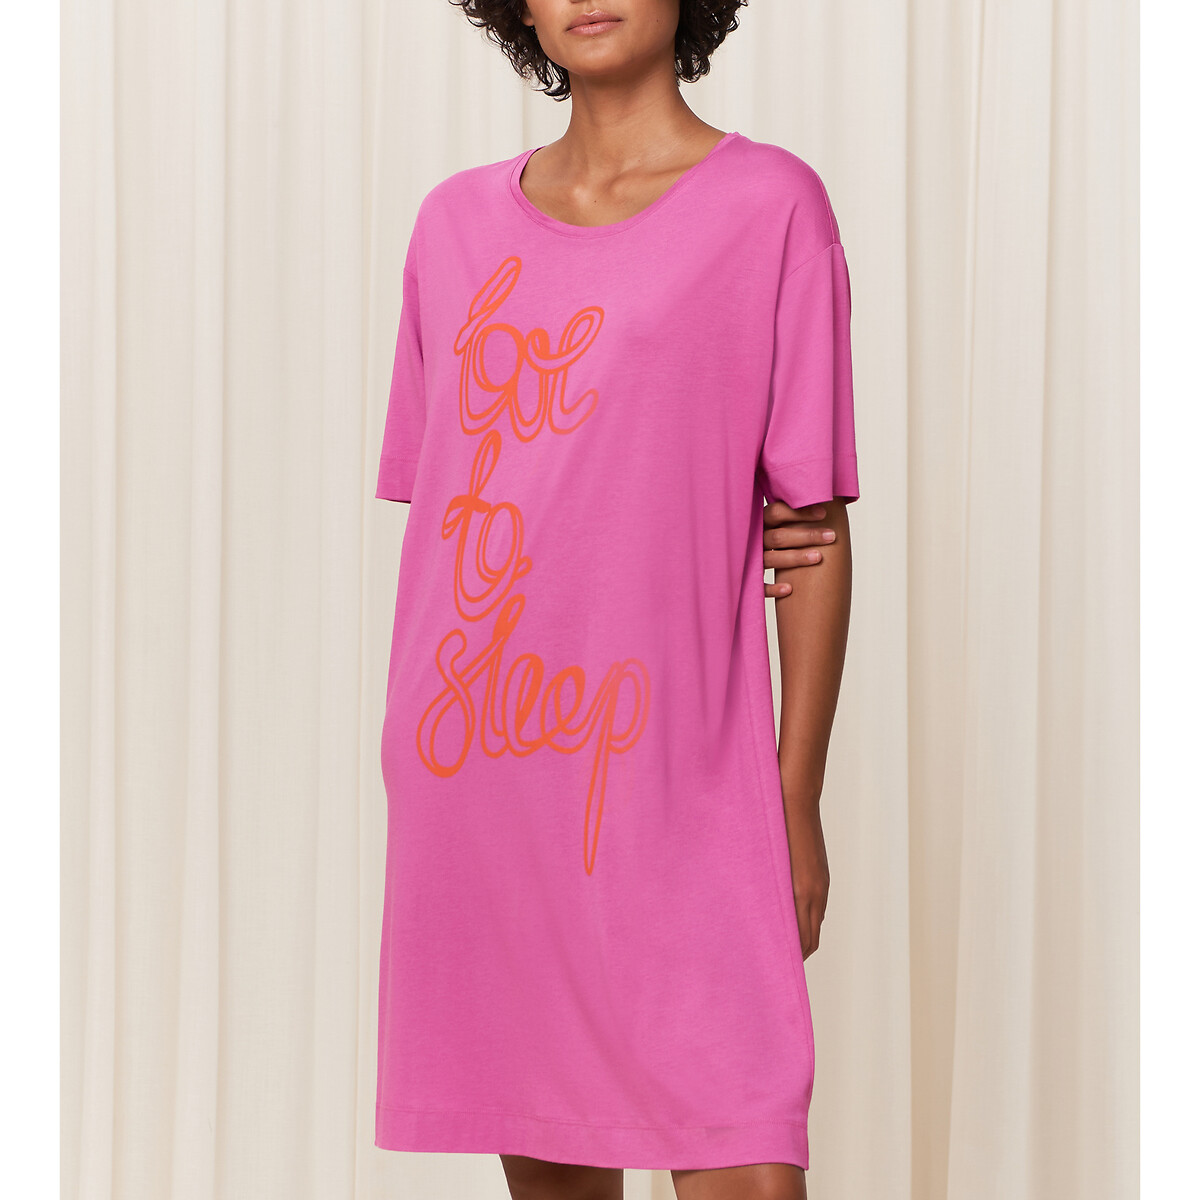 Рубашка Из хлопка и модала Nightdresses 36 (FR) - 42 (RUS) розовый LaRedoute, размер 36 (FR) - 42 (RUS) Рубашка Из хлопка и модала Nightdresses 36 (FR) - 42 (RUS) розовый - фото 1